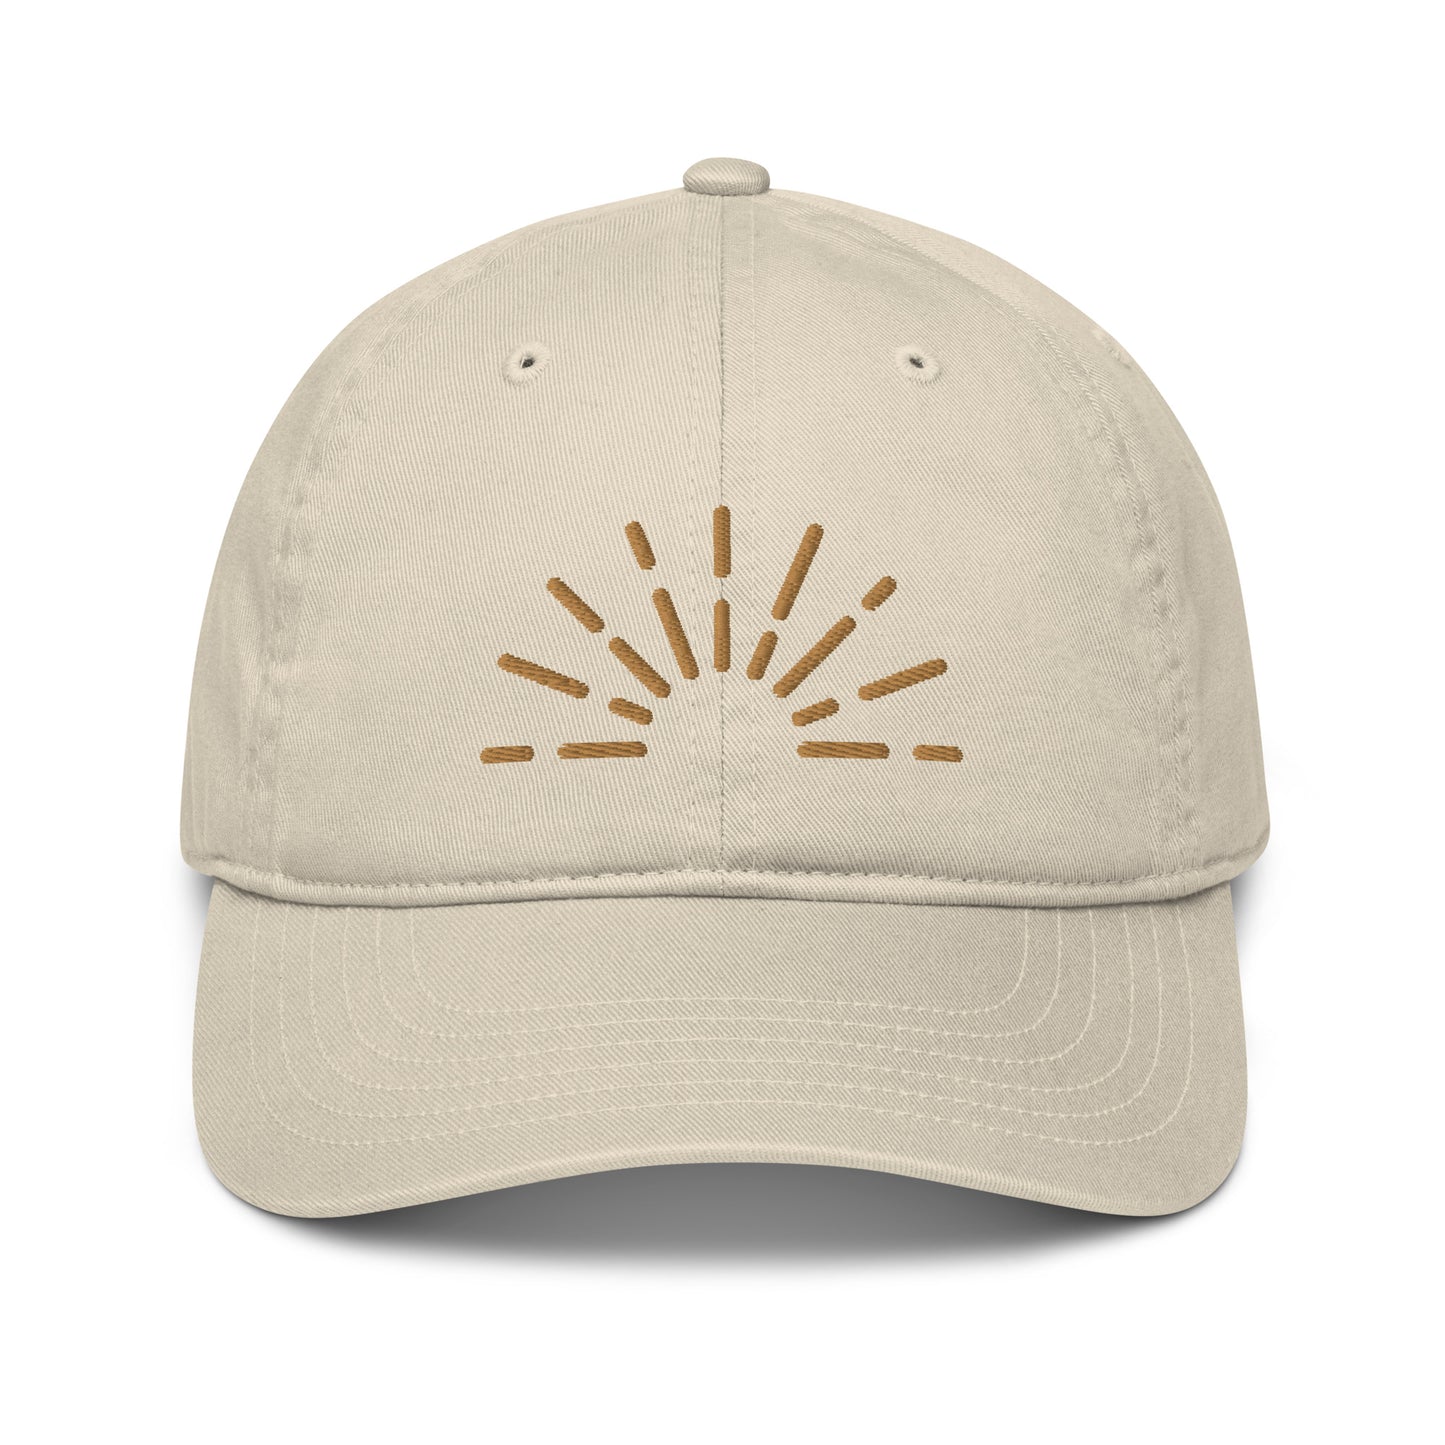 Organic sunshine cap